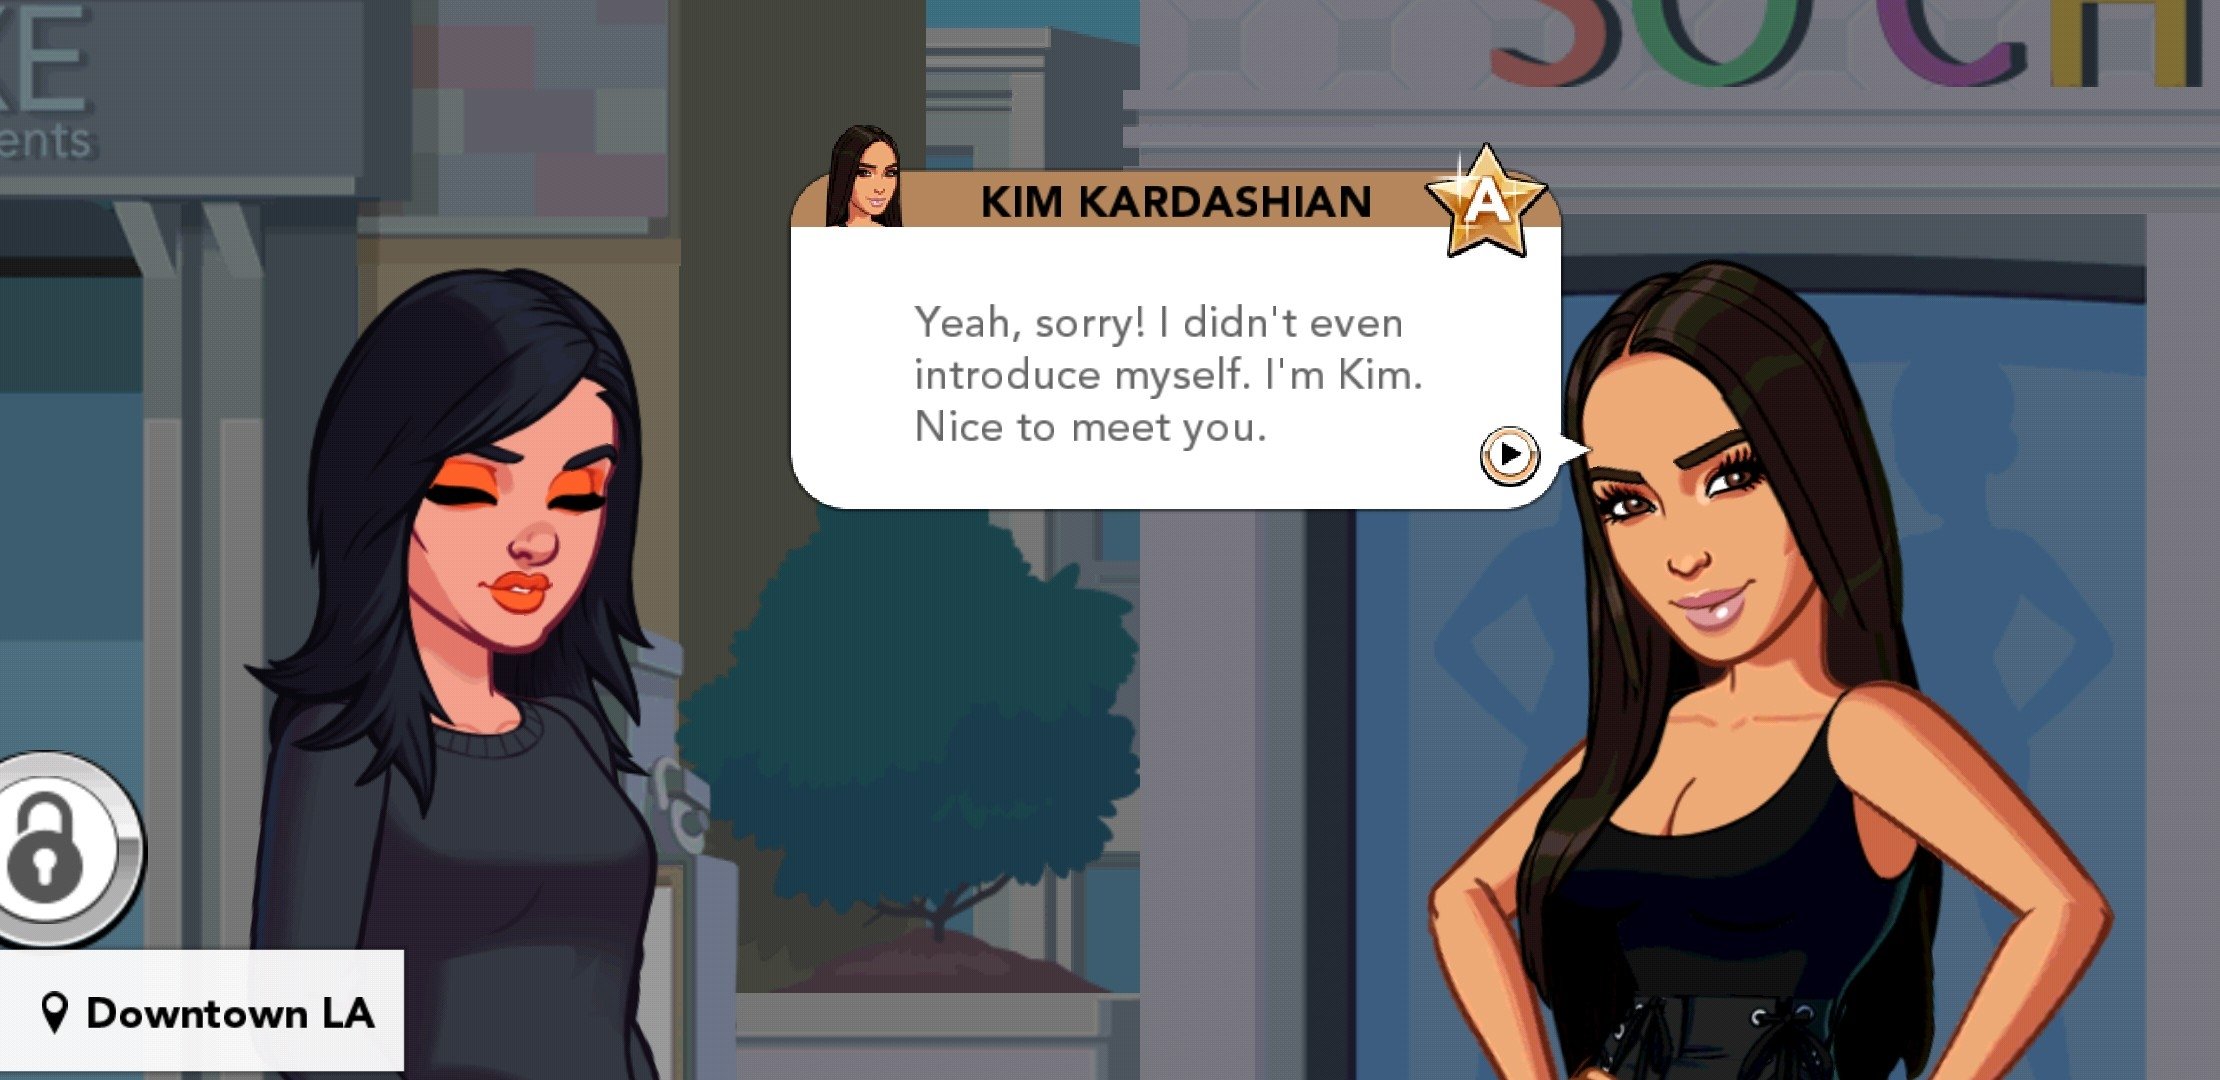 Kim kardashian hollywood apk download